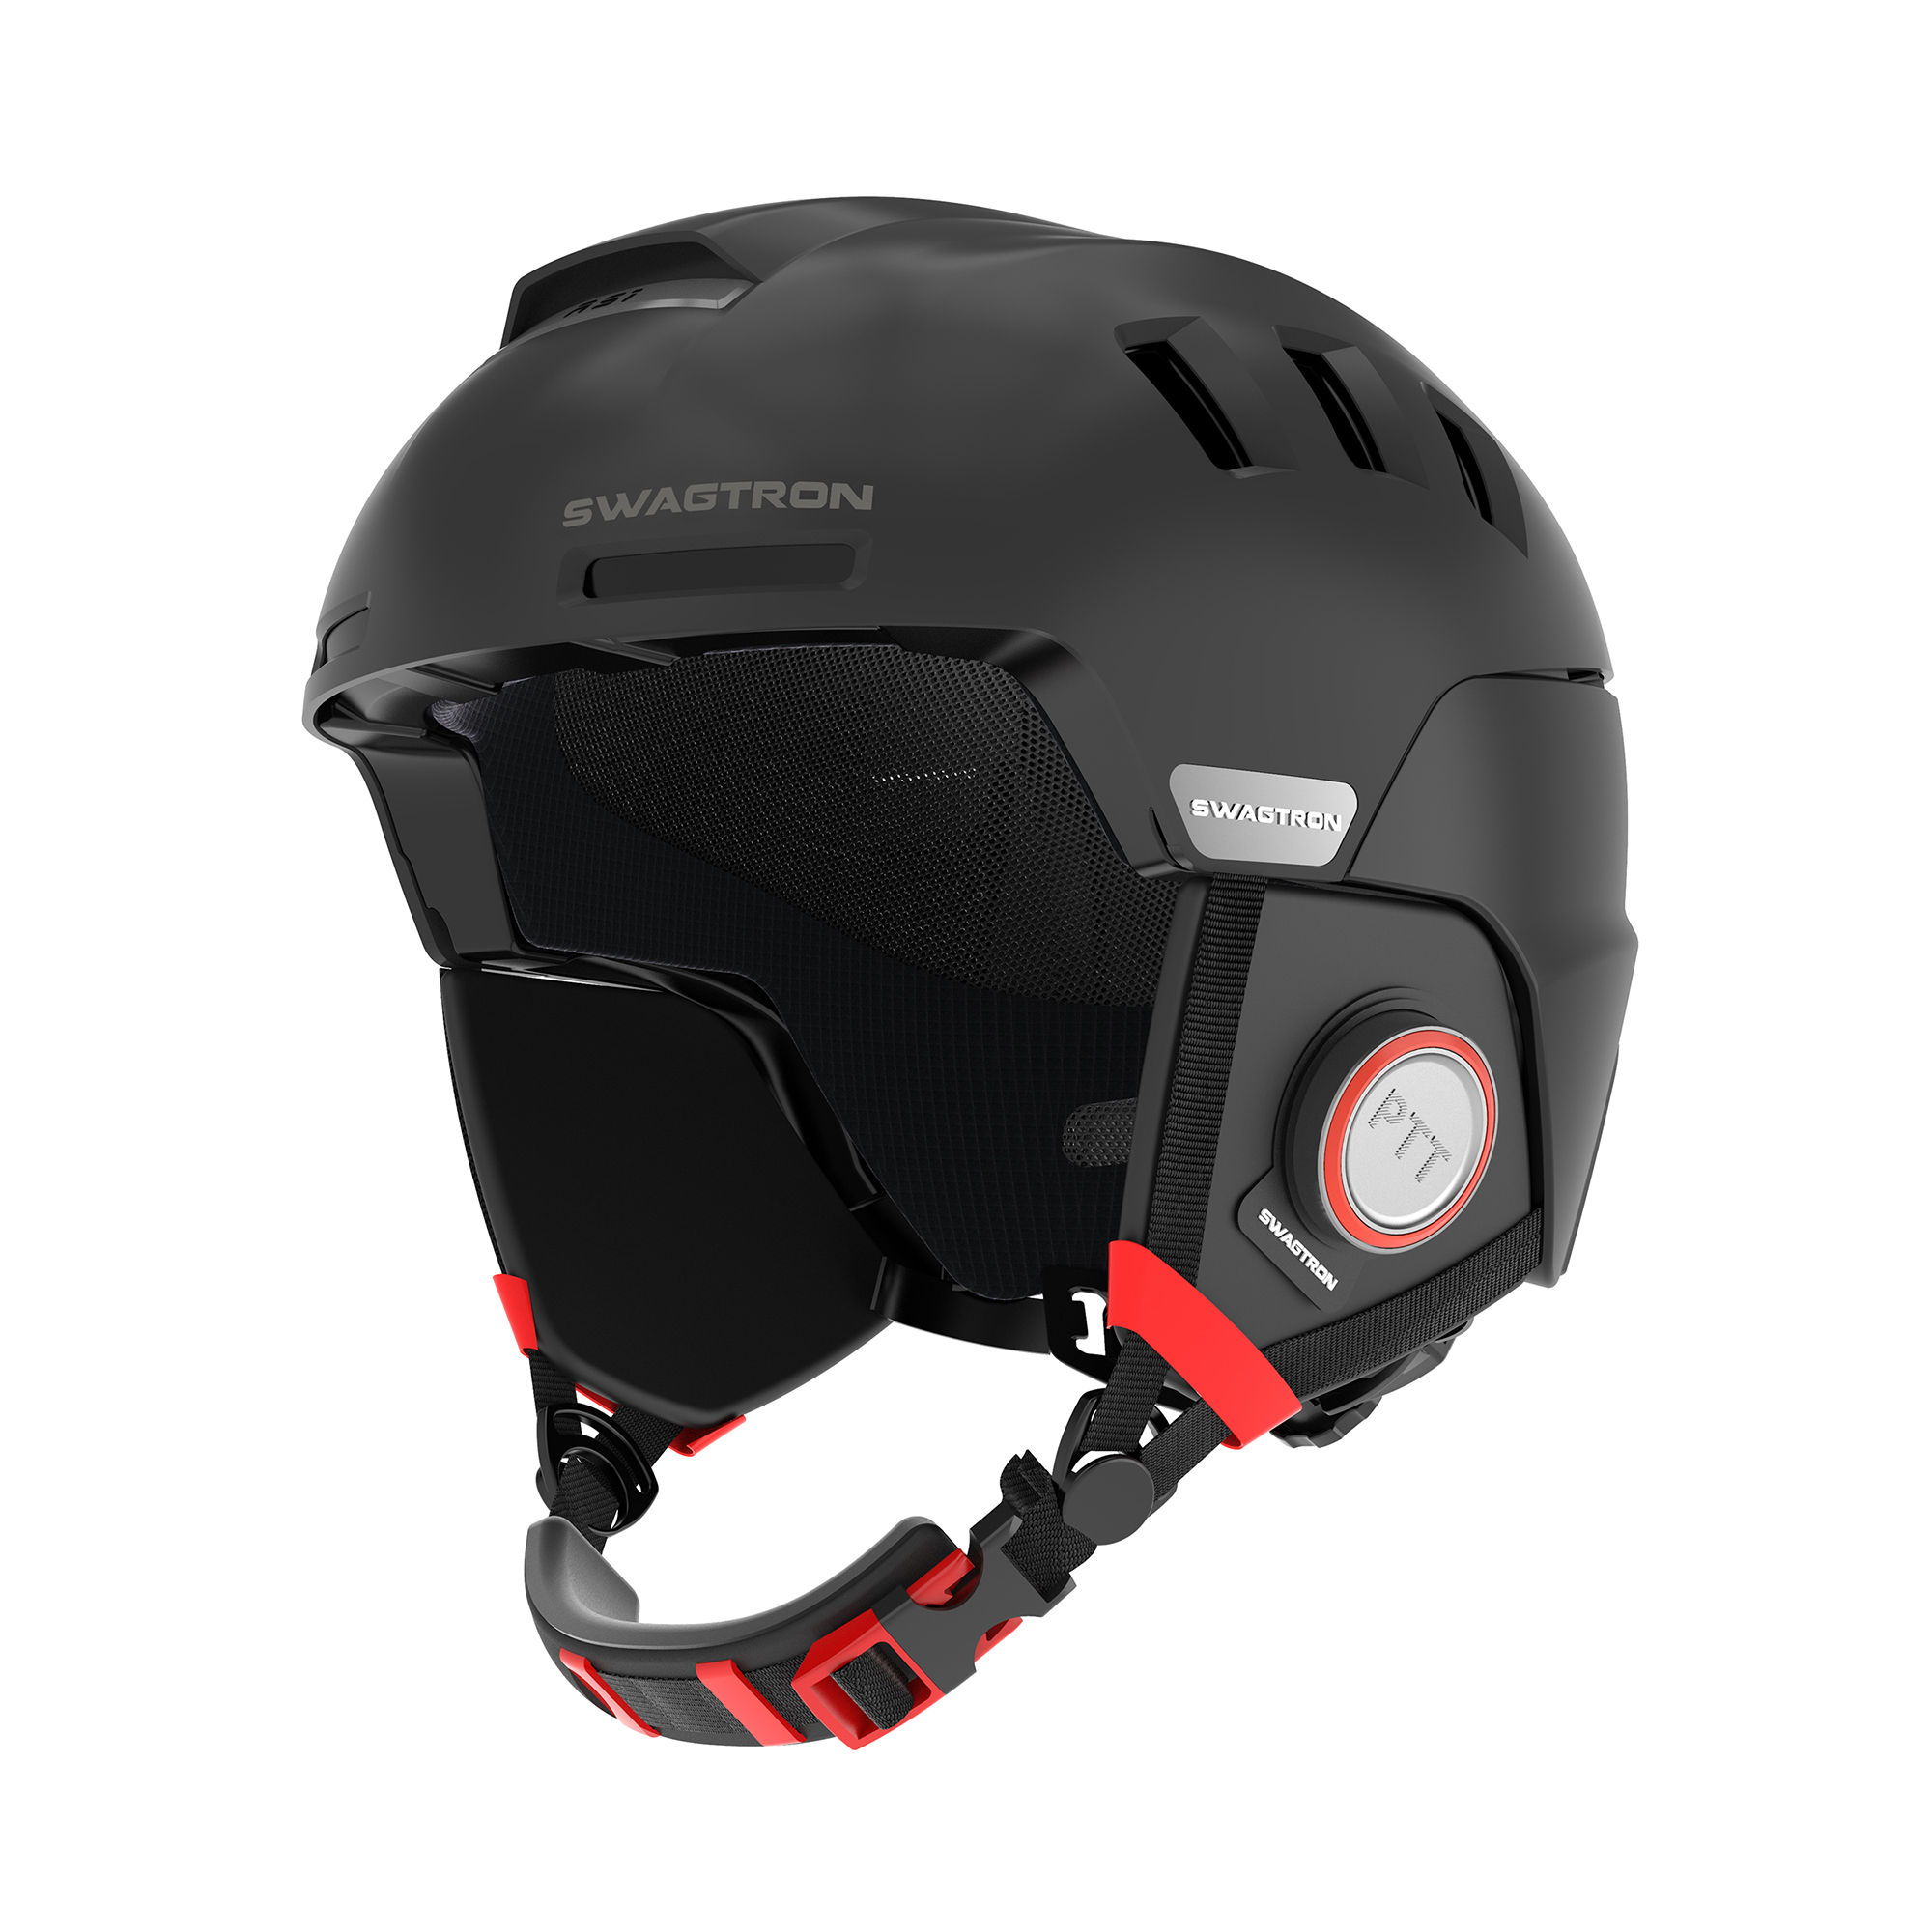 Swagtron Snowtide Smart Ski and Snowboard Helmet